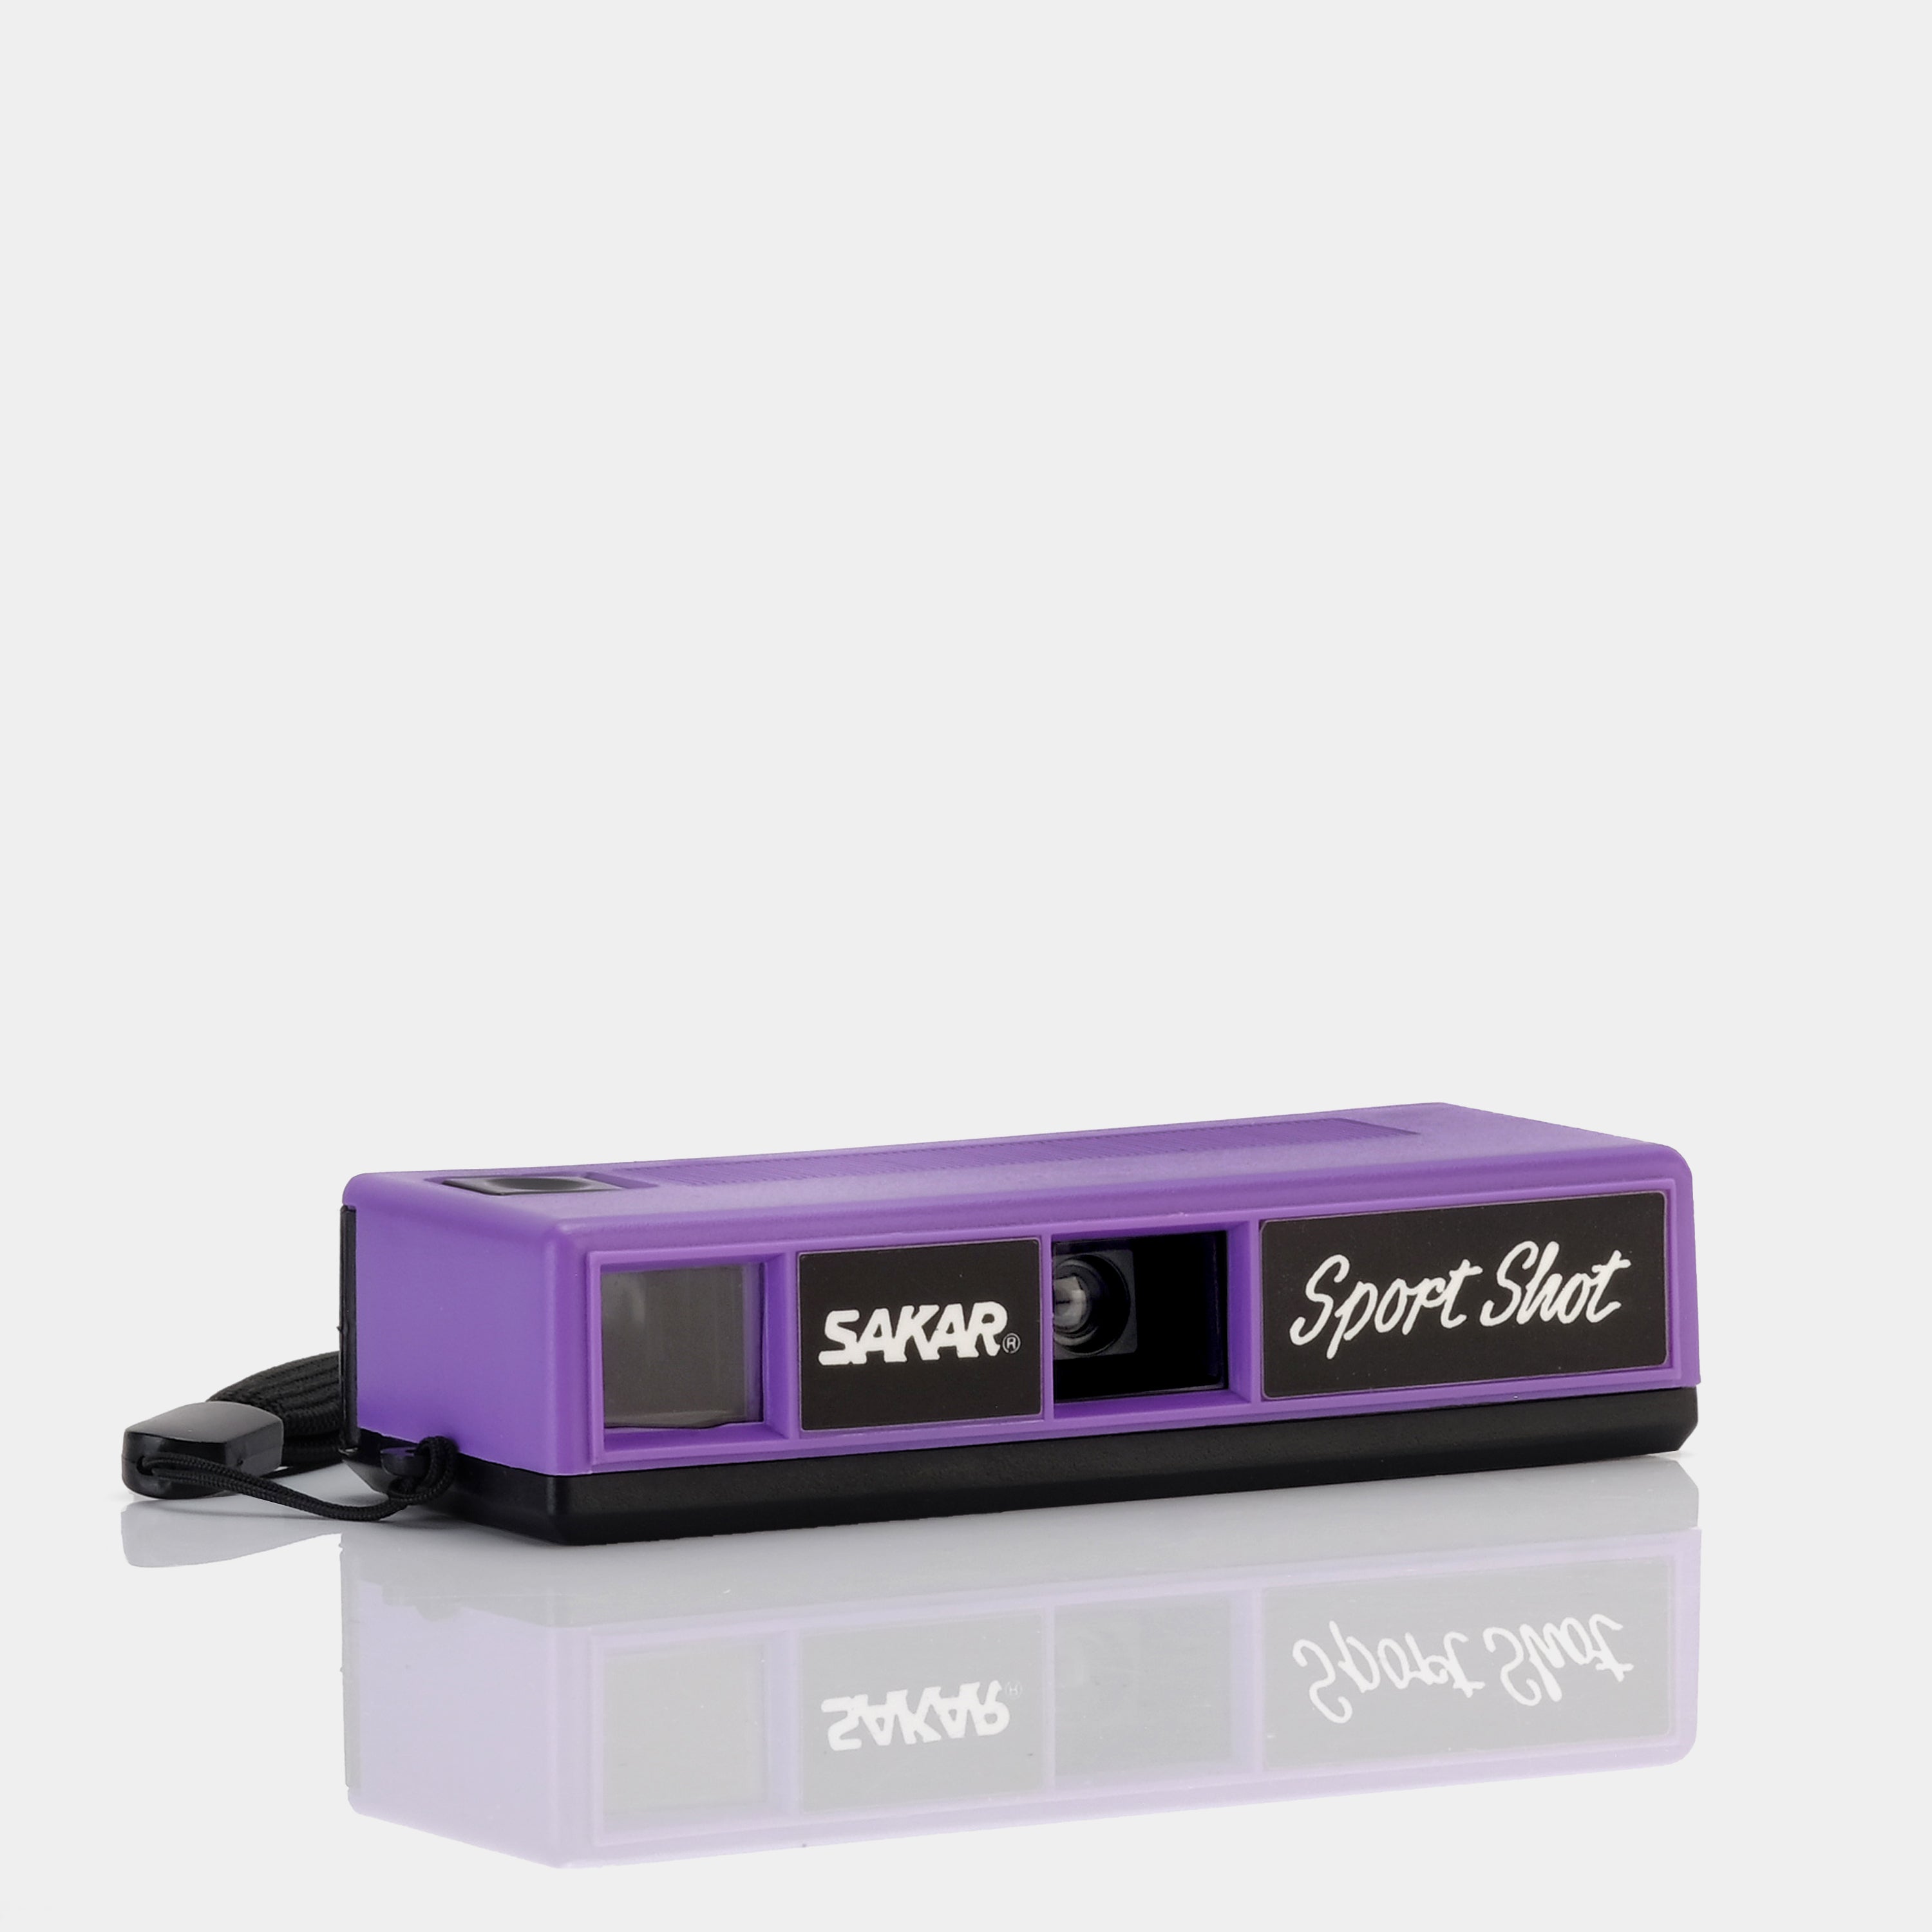 Sakar Sport Shot Purple 110 Format Film Camera